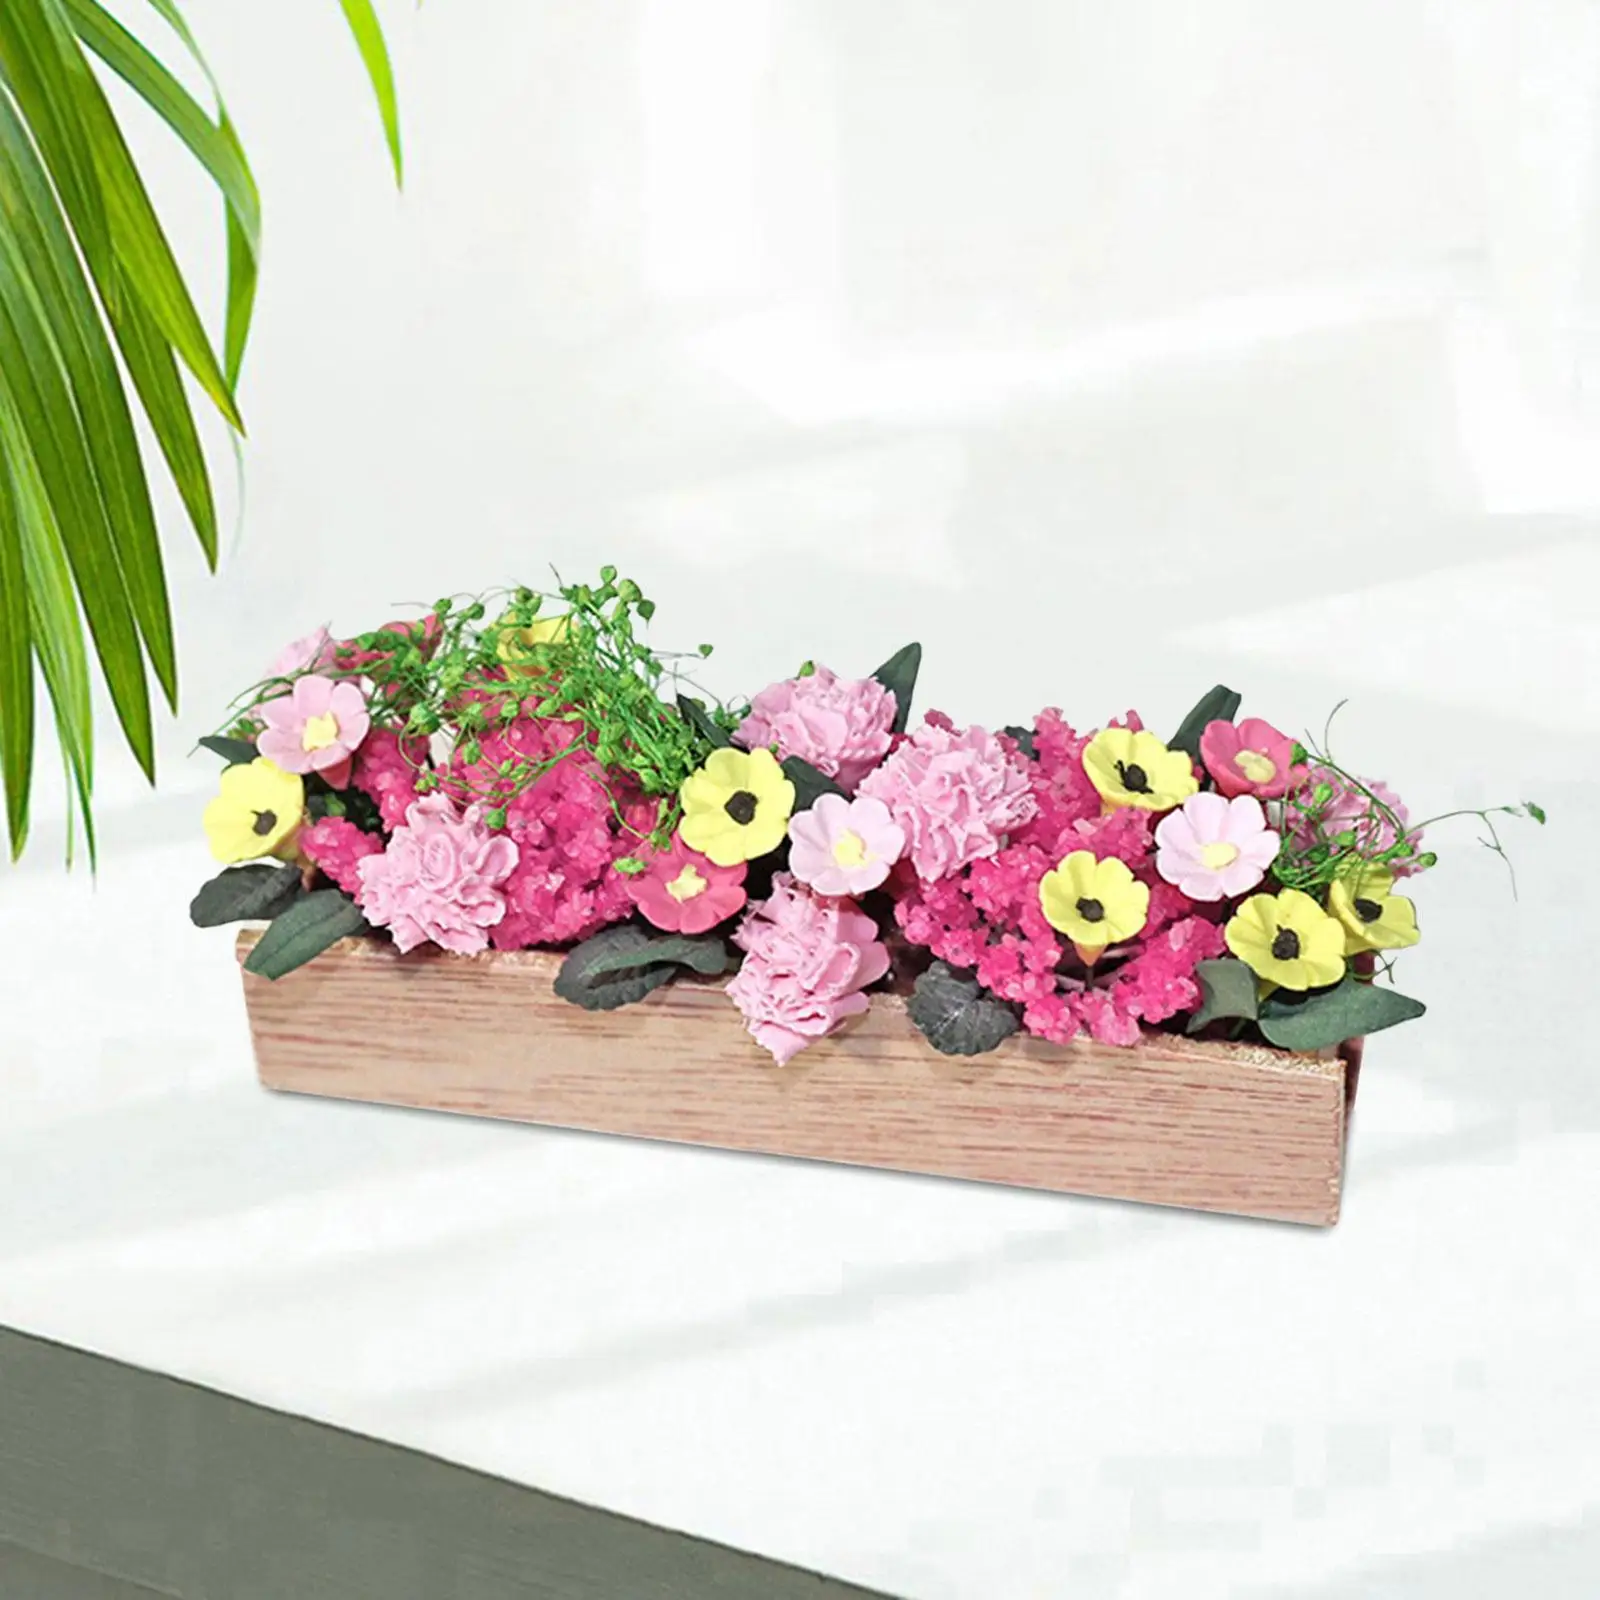 Dollhouse Miniature Flower Pots Micro Landscape Home Pretend Play for Decor